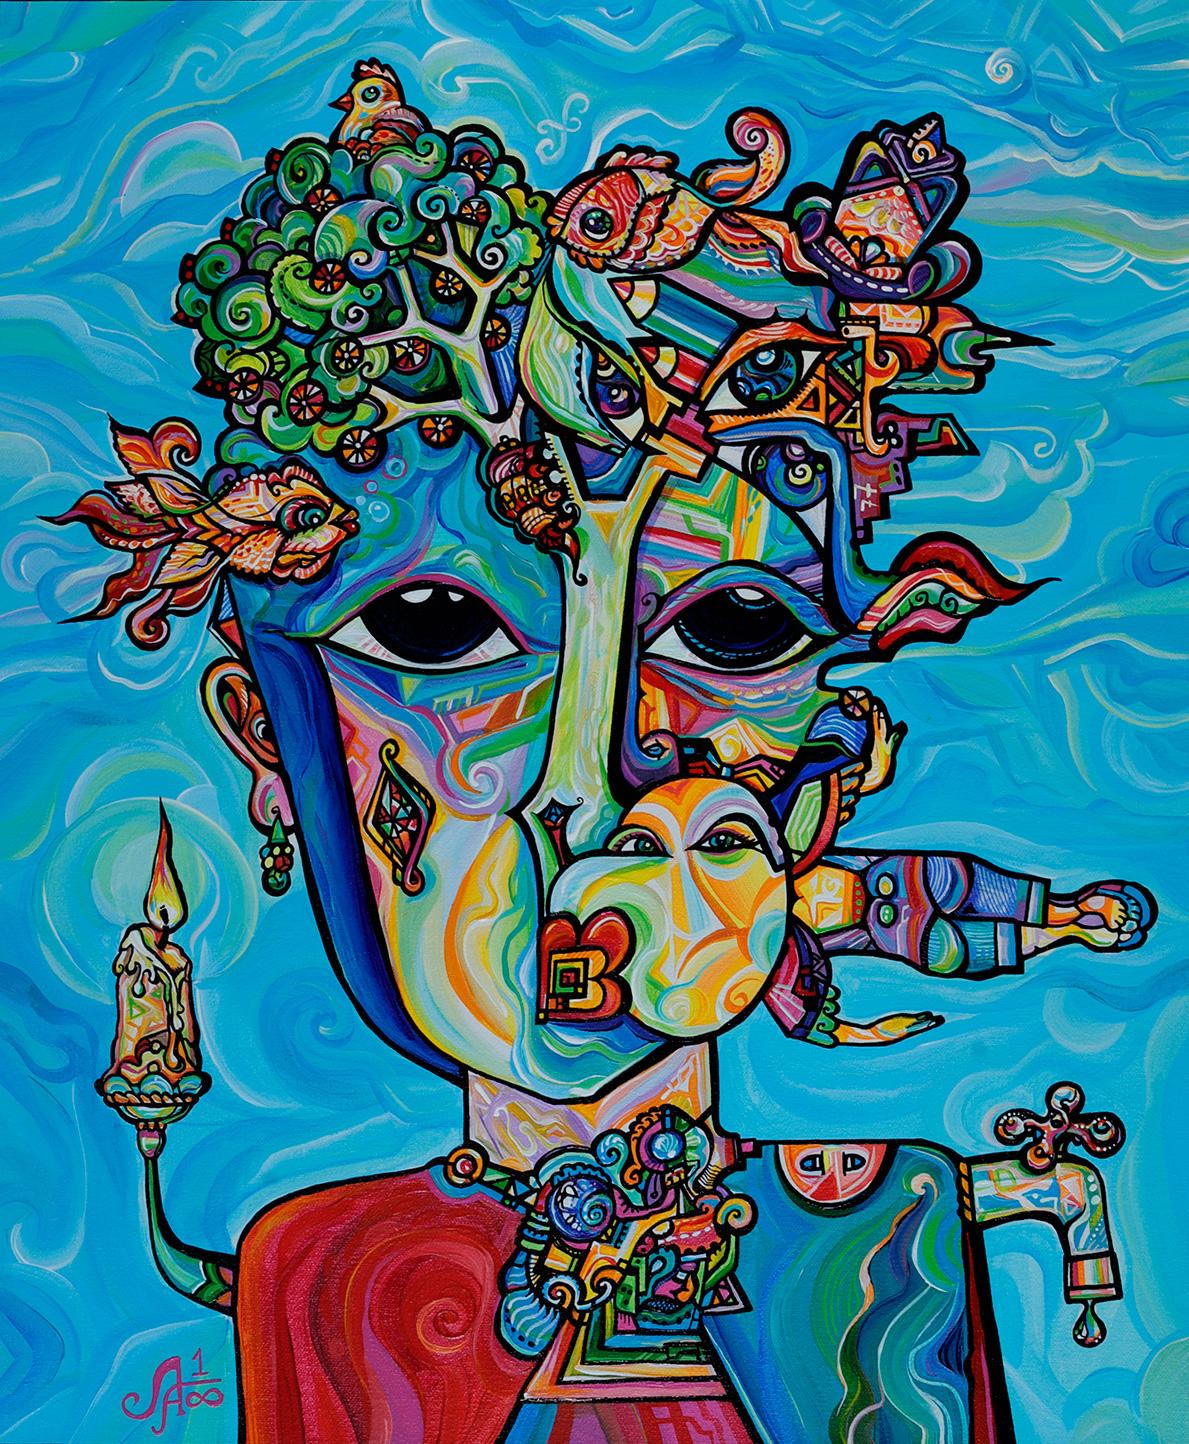 Biomorphic Cubist Painting Titled, "Aquarian"